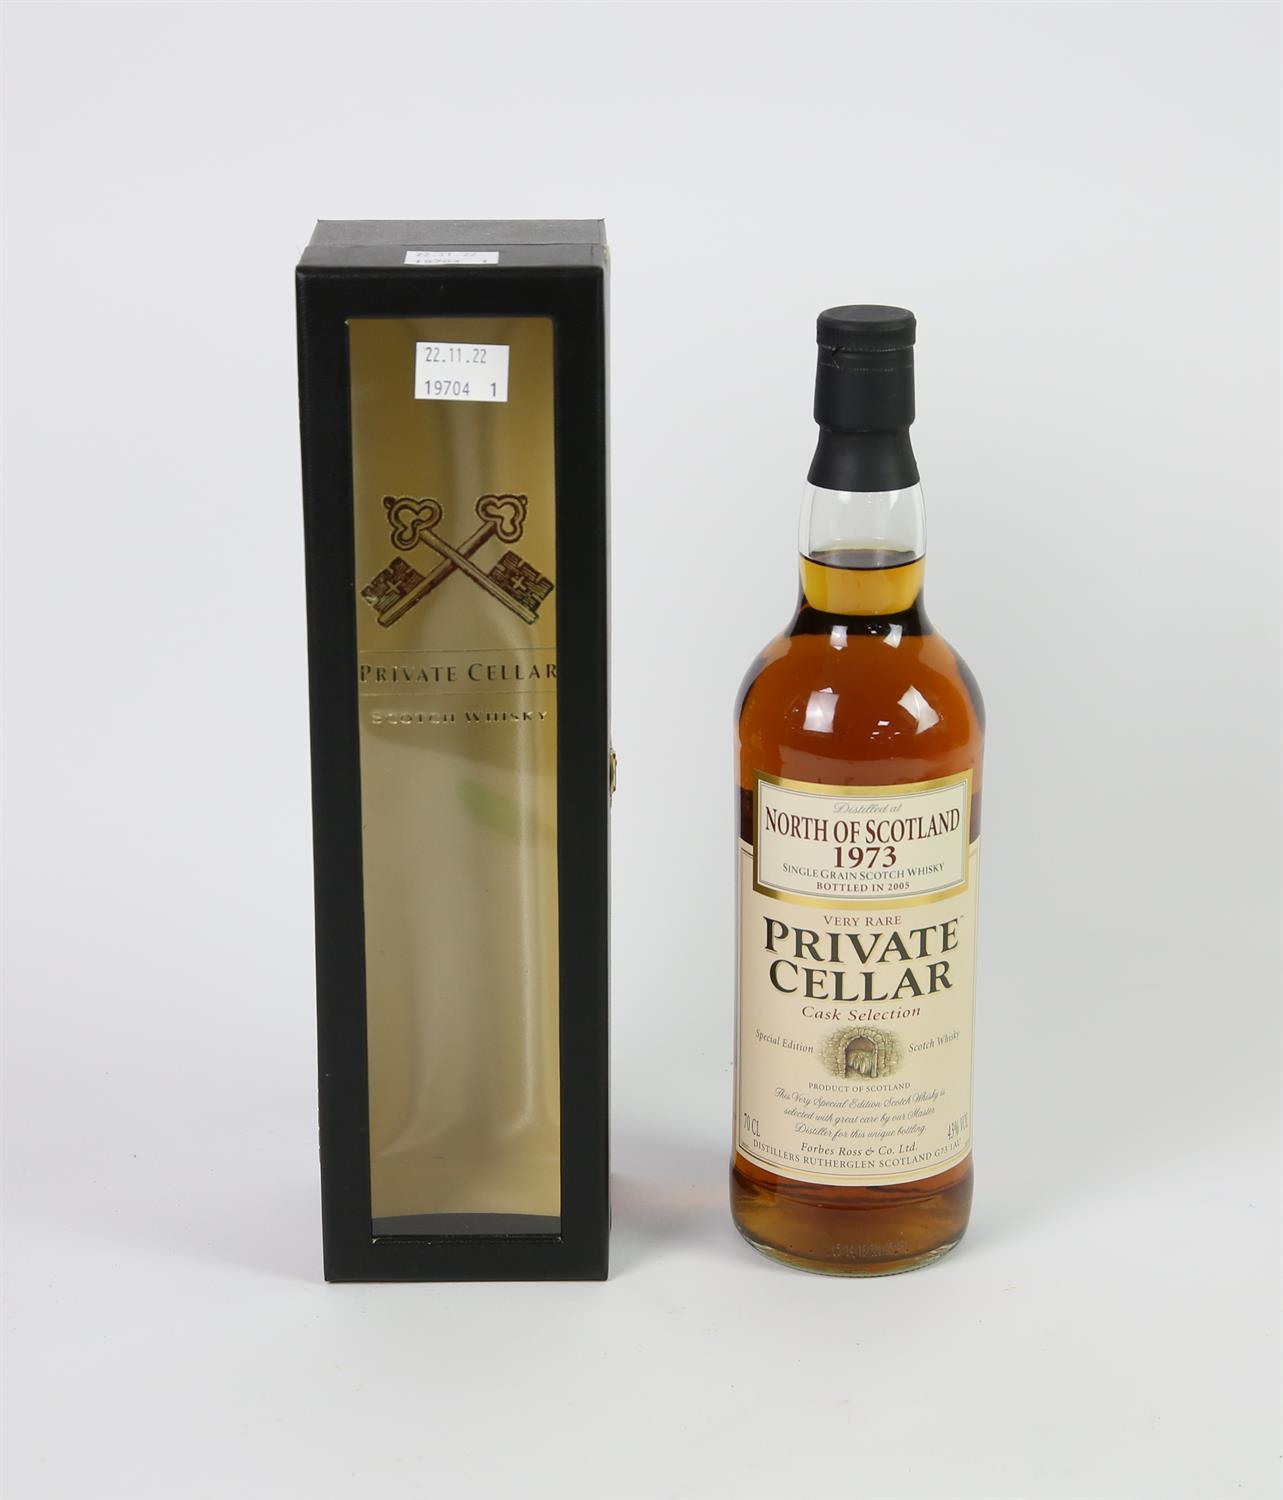 Private Cellar Cask Selection whisky, North of Scotland 1973, single bottle in original carton